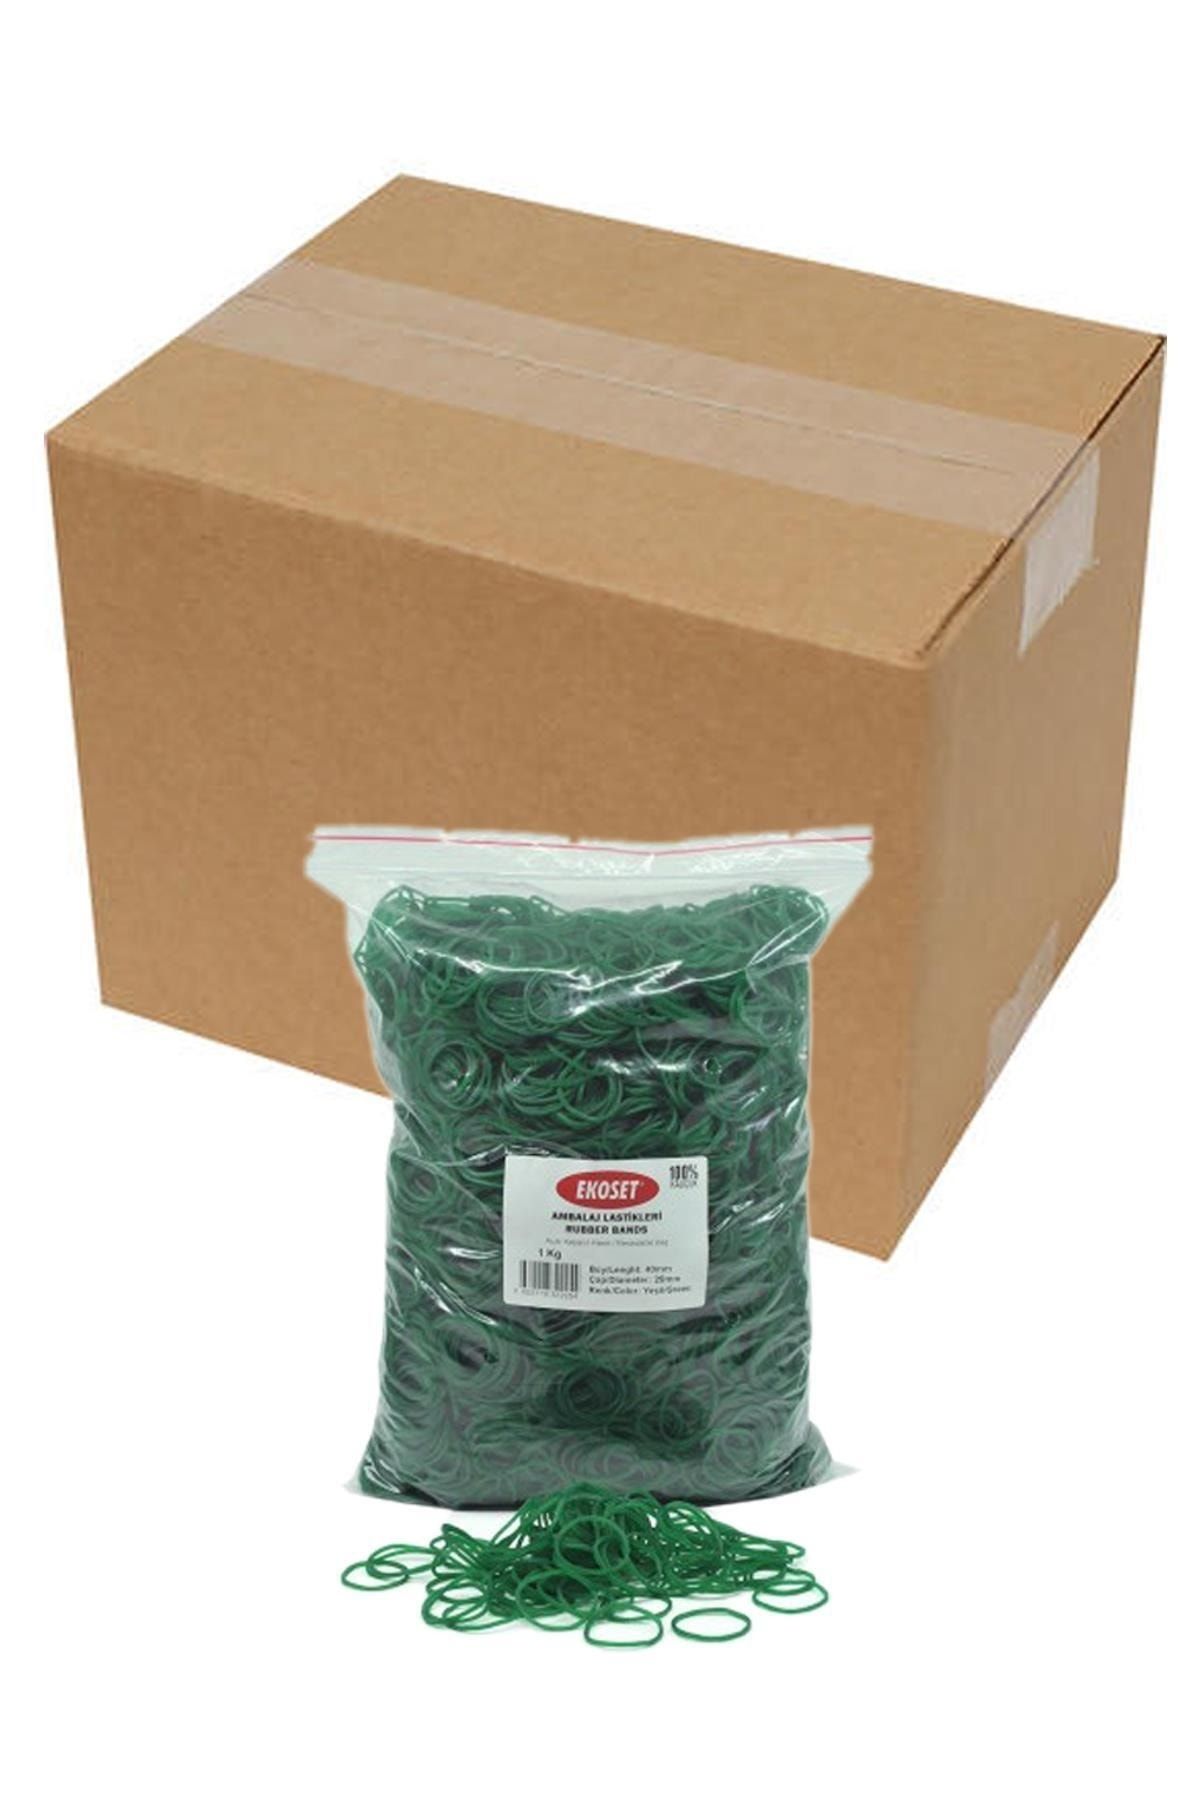 ekoset 40mm Yeşil Renkli Kauçuk Paket Ambalaj Lastiği 12kg Koli